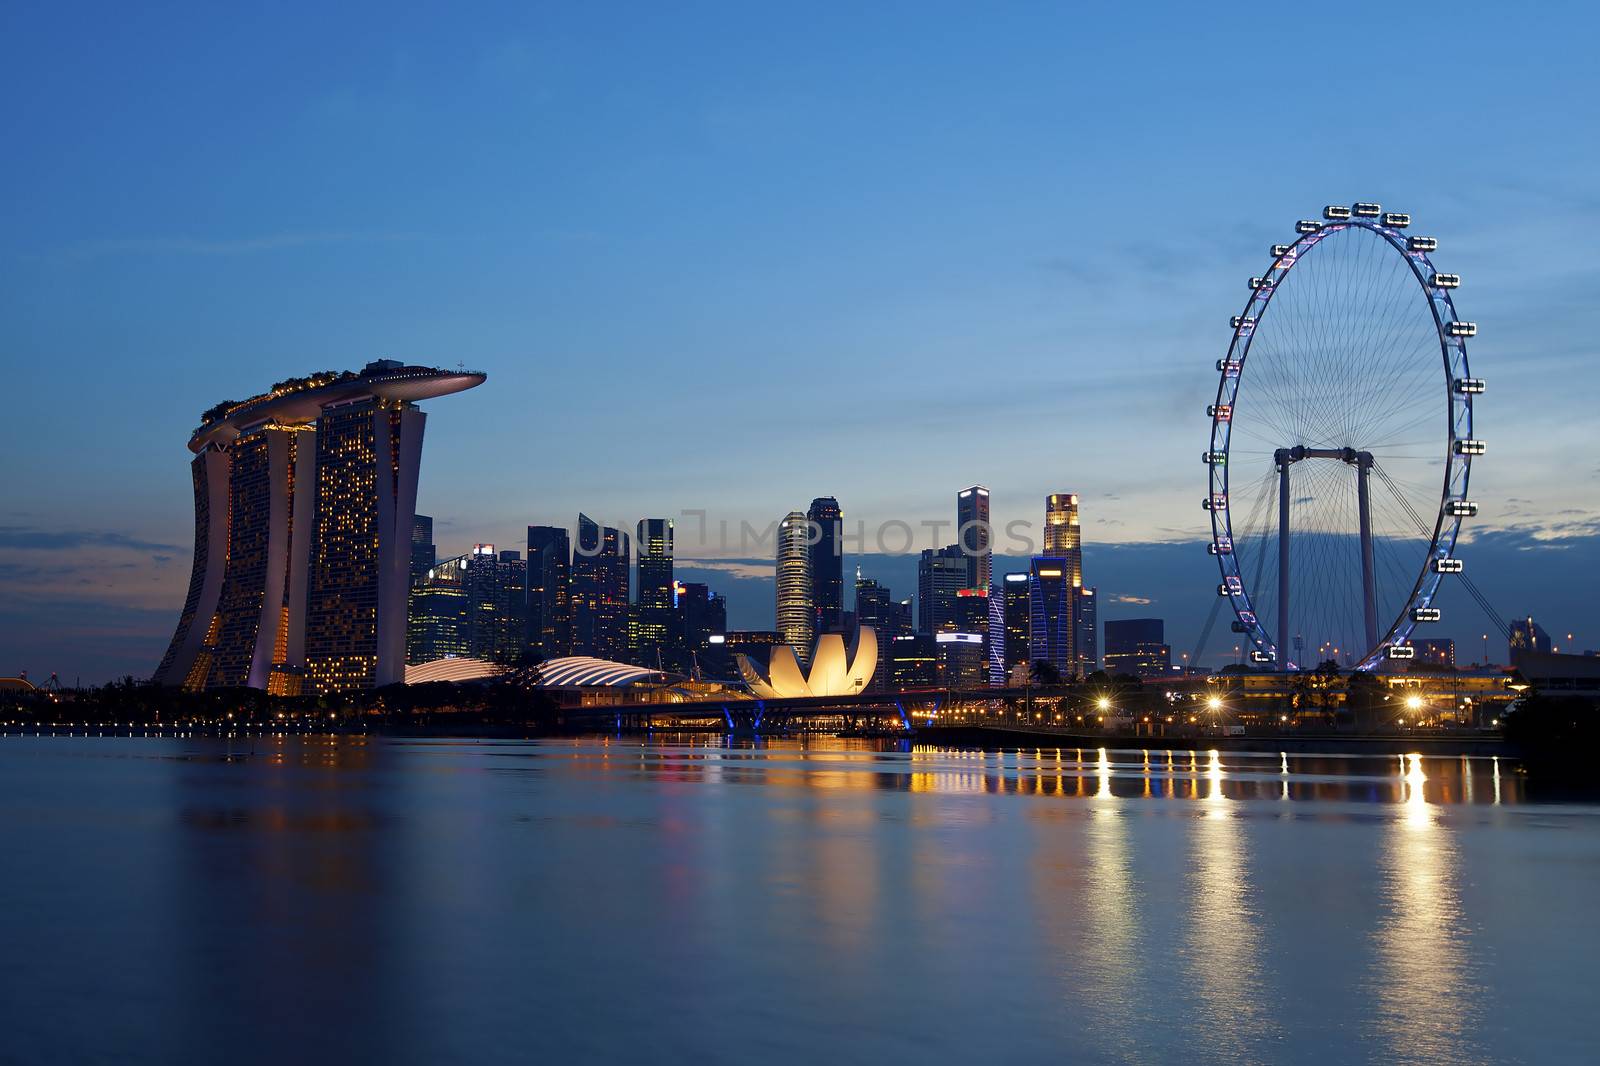 View of Singapore city skyline at night